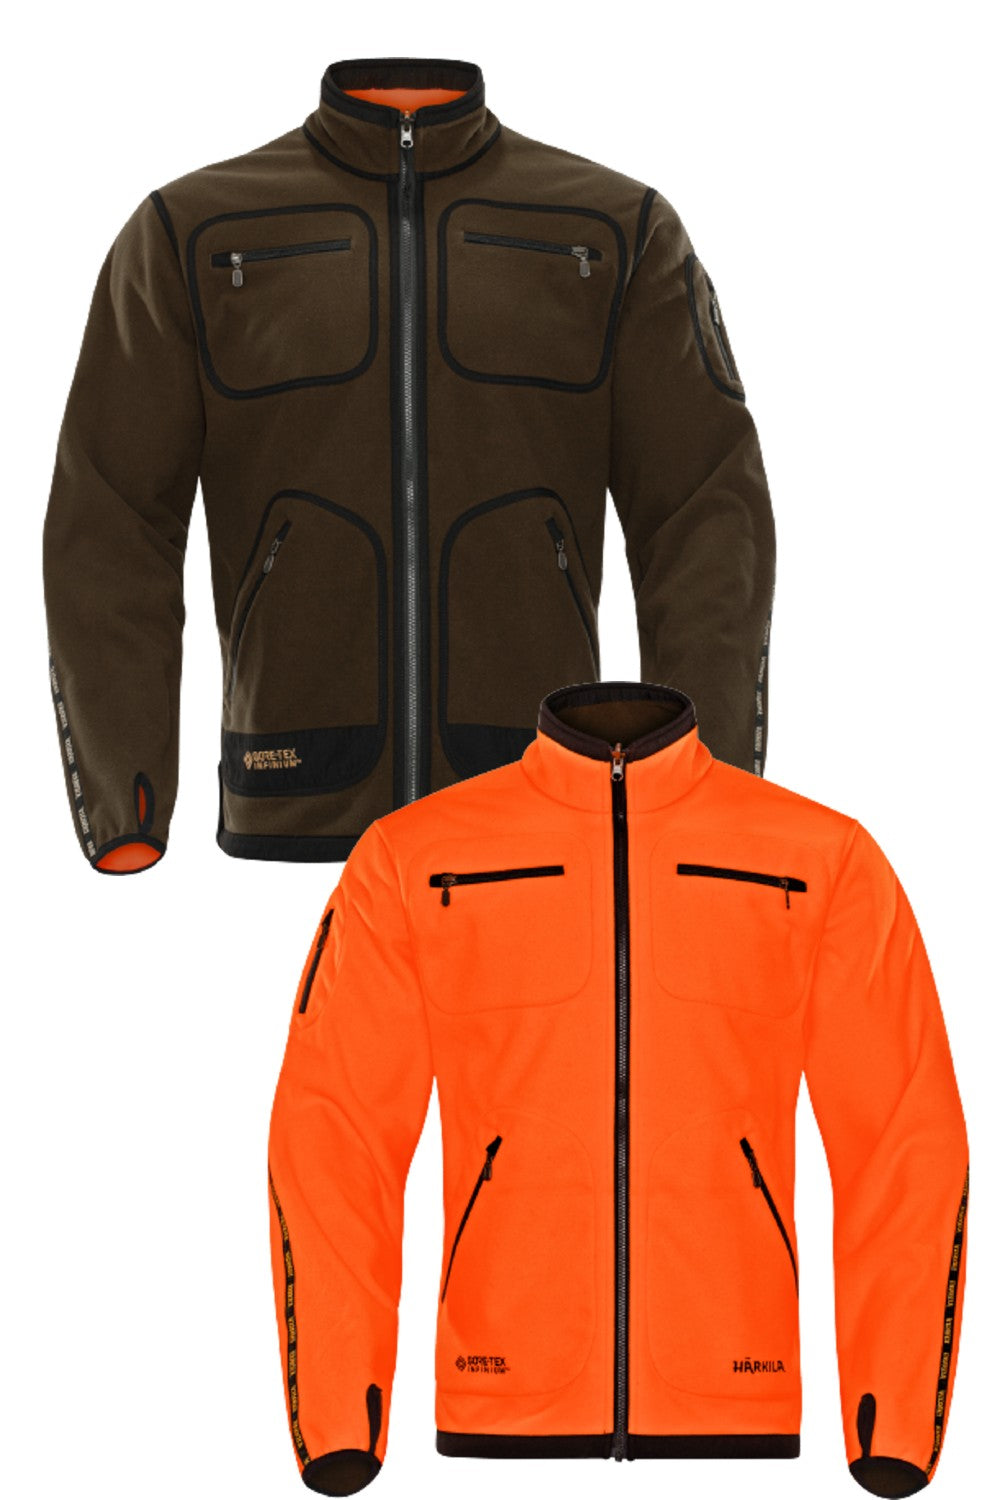 Harkila Kamko Fleece Jacket in Hunting Green/ Orange Blaze outside and inside 